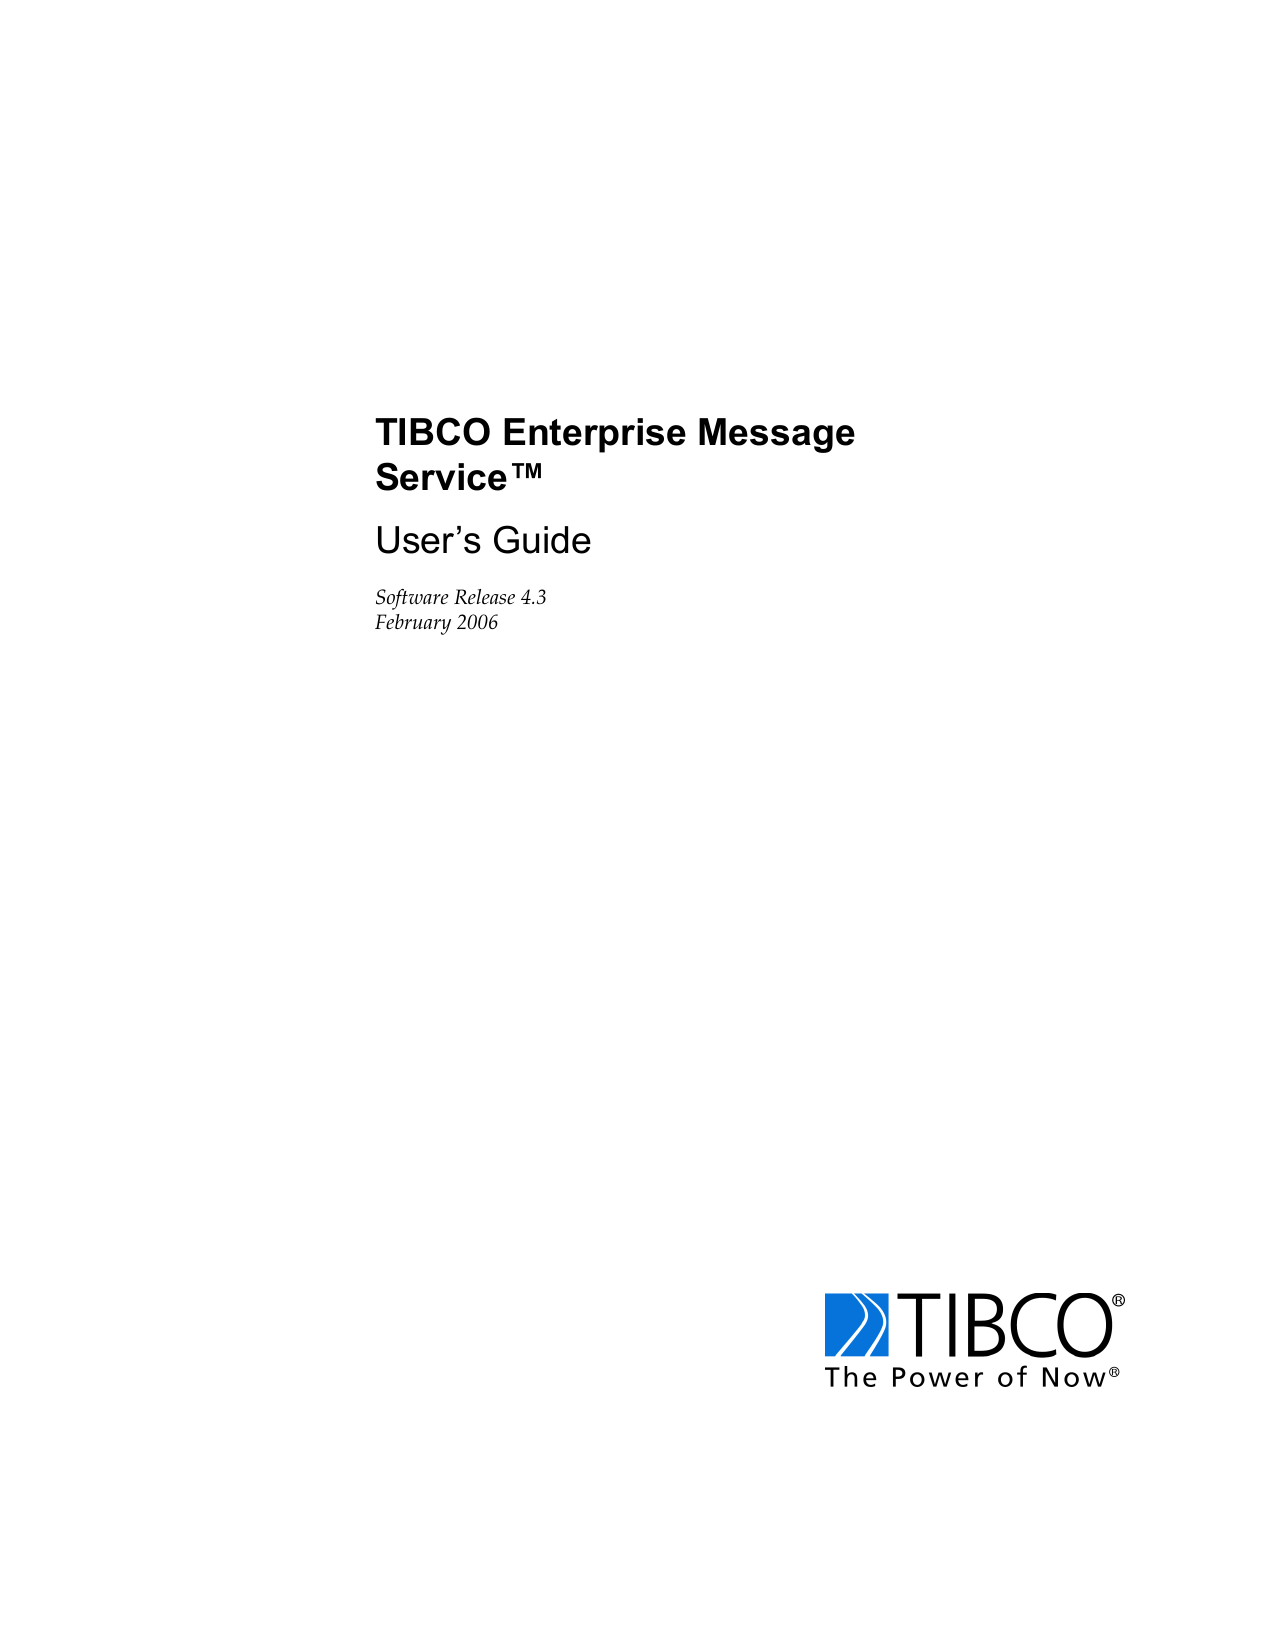 tibco gems 3.4 download